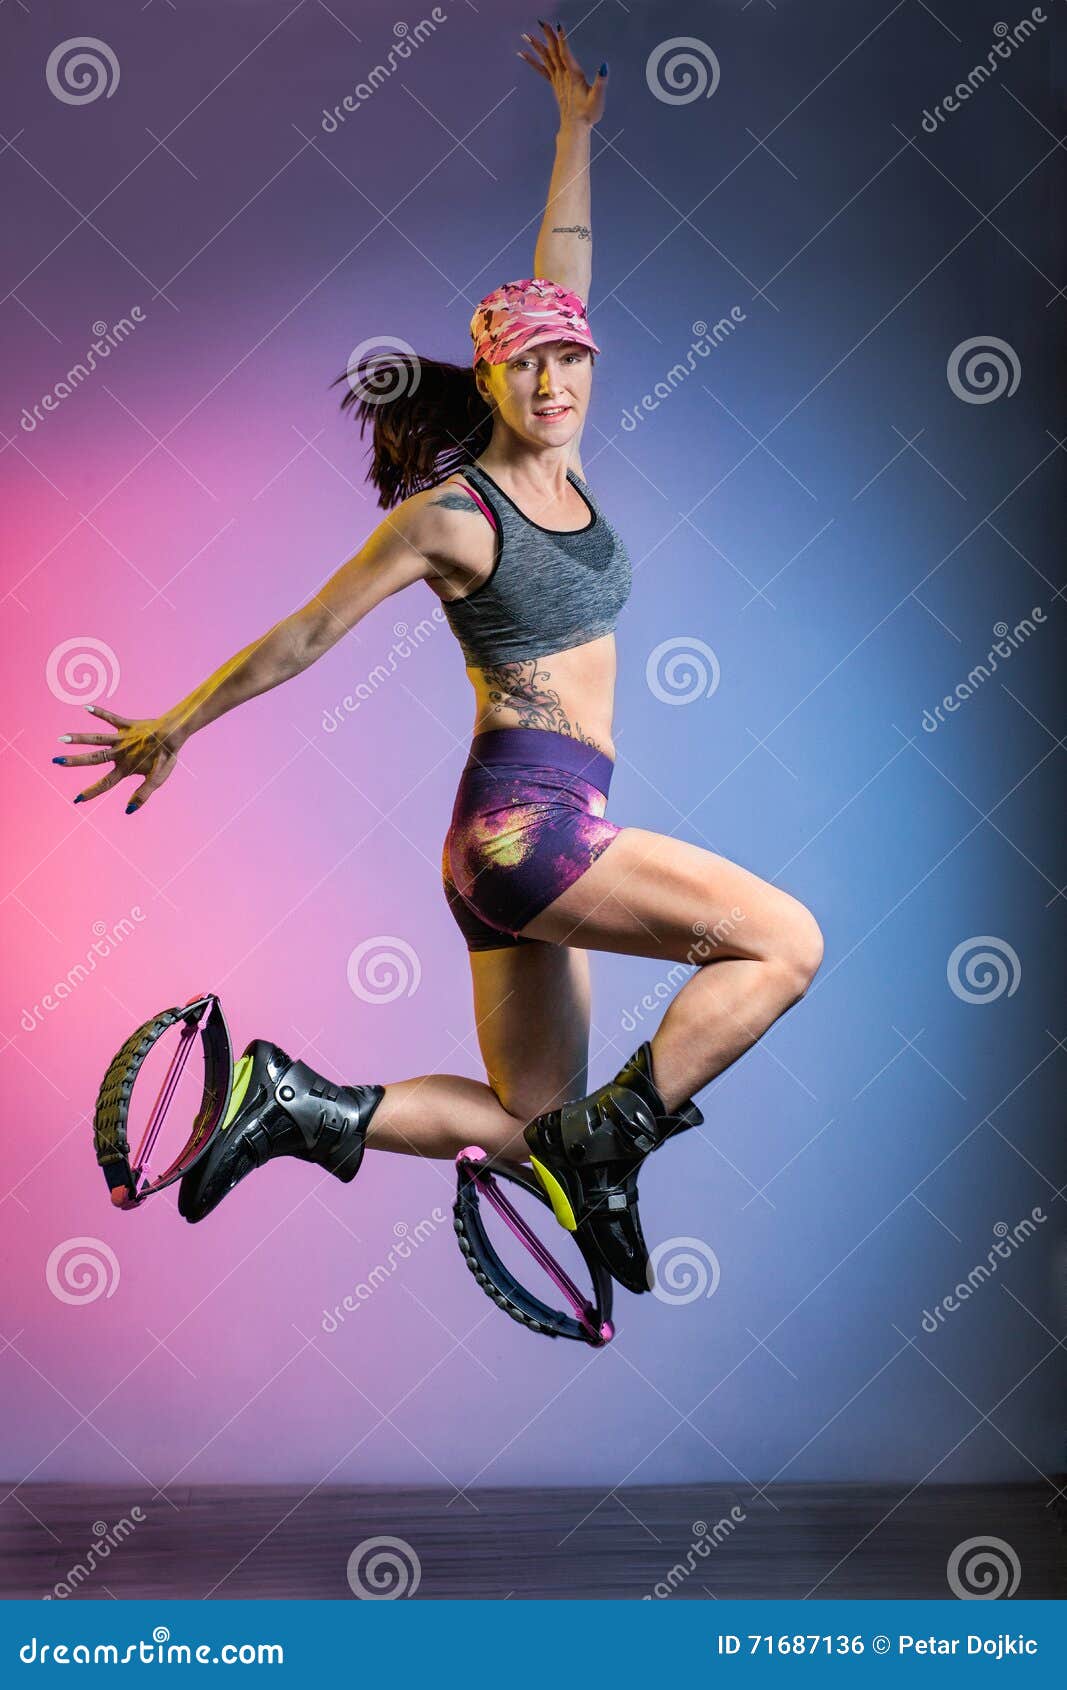 https://thumbs.dreamstime.com/z/woman-exercising-jumping-kangoo-jumps-shoes-smiling-brunette-girl-long-hair-71687136.jpg